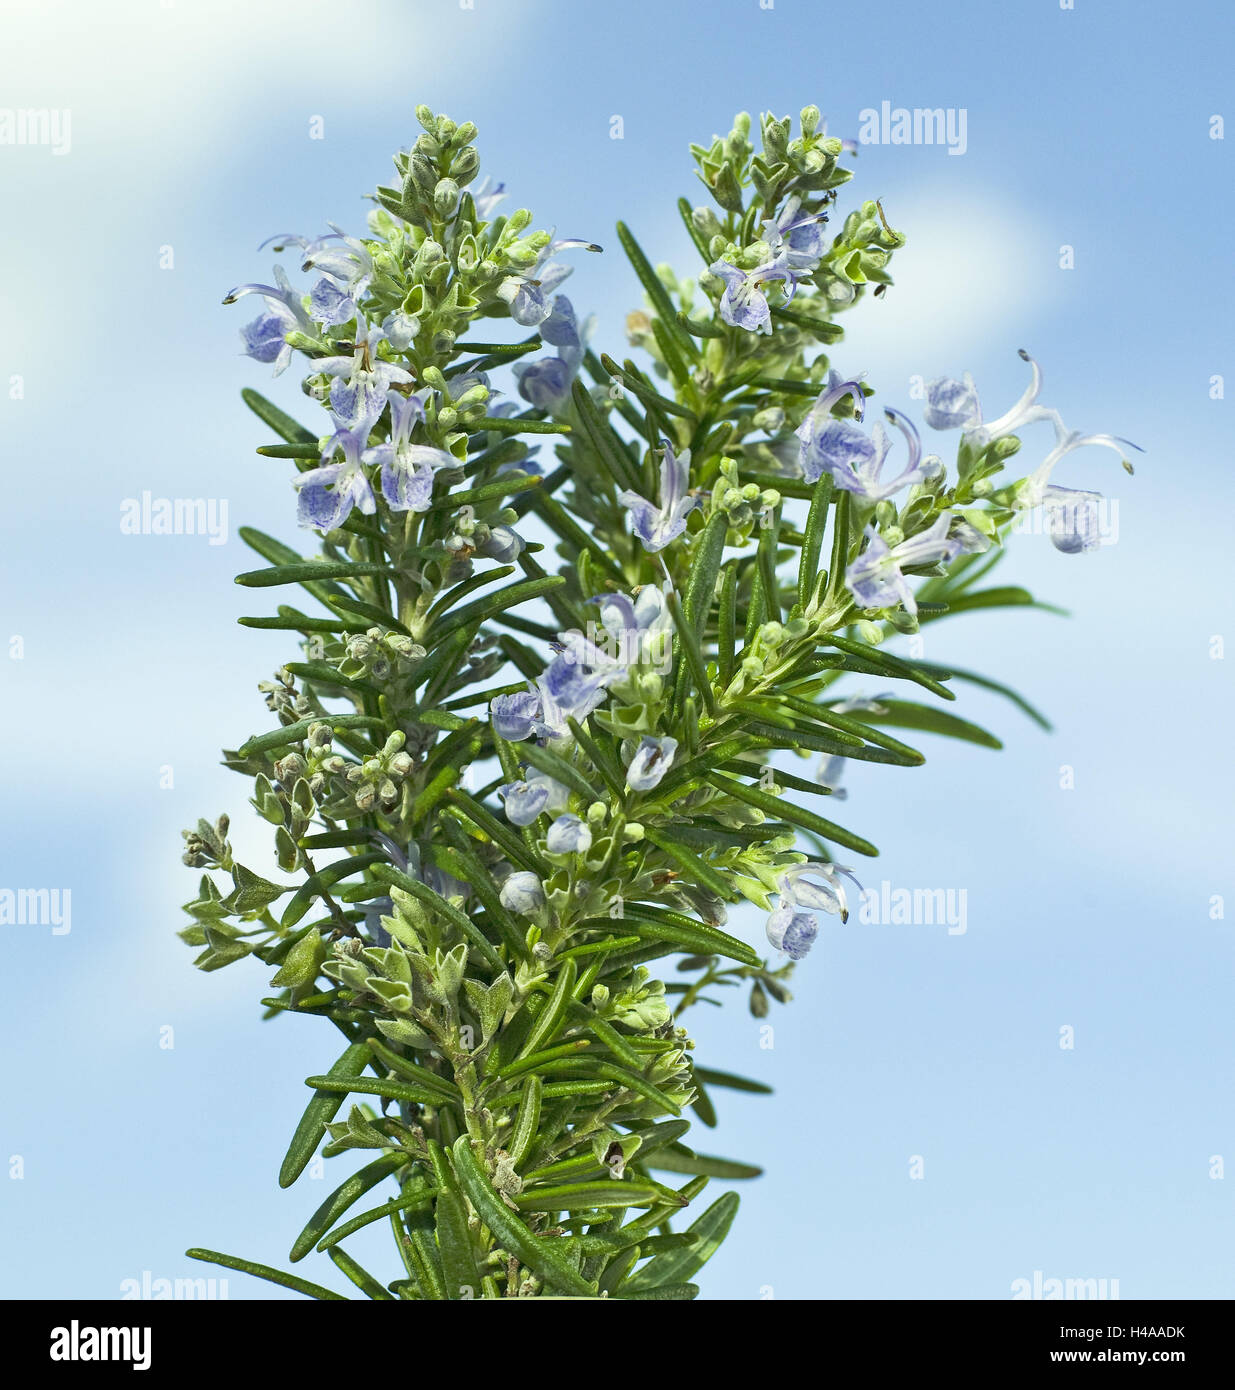 Rosemary, Rosmarinus officinalis, mint family, Mediterranean area, blossoming, bundled up, evergreen, Stock Photo